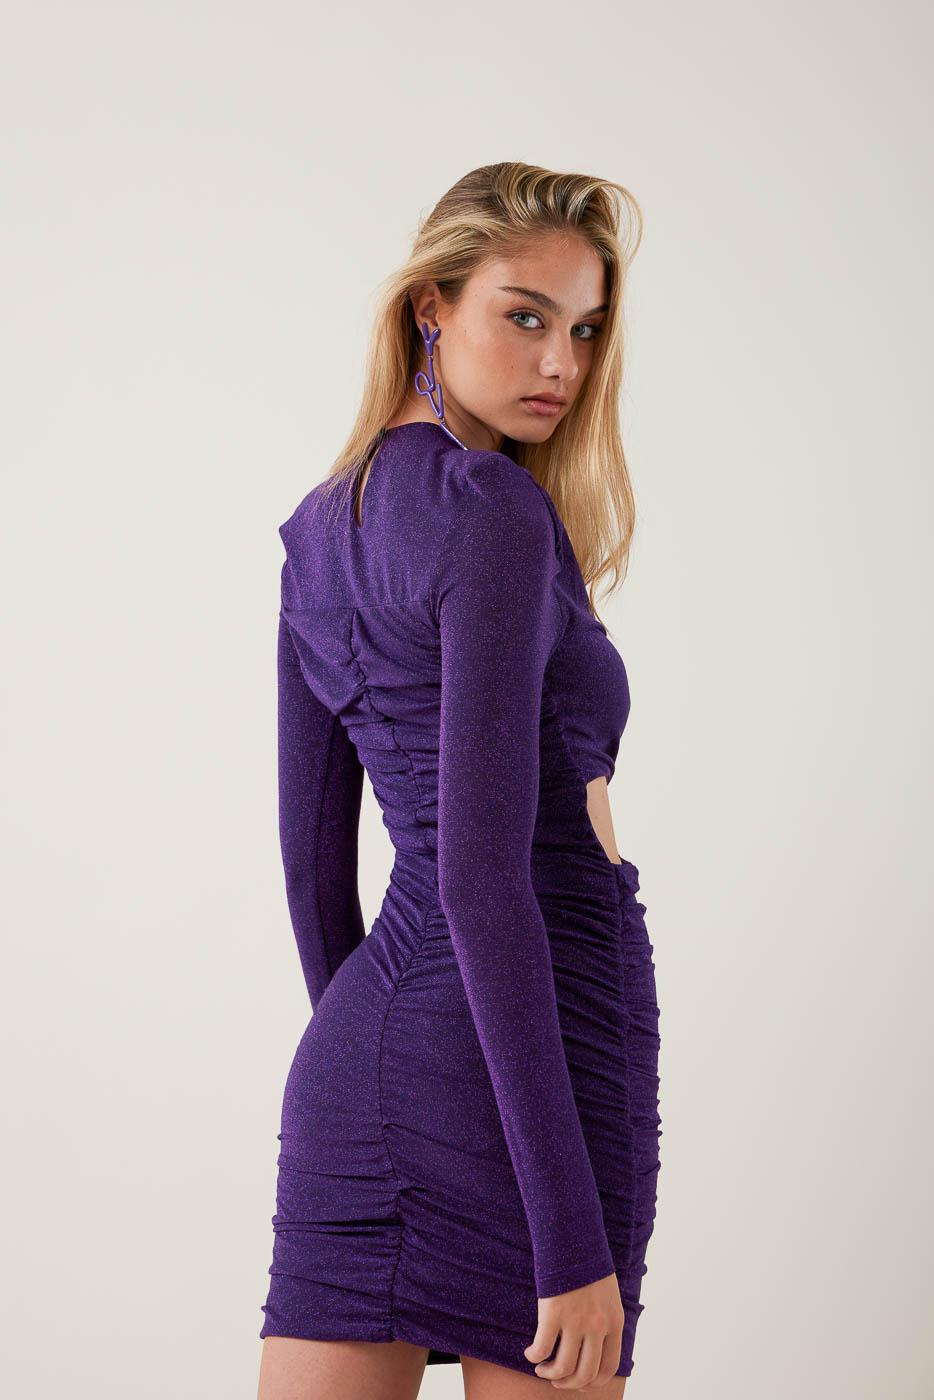 Vestido Ariana violeta m